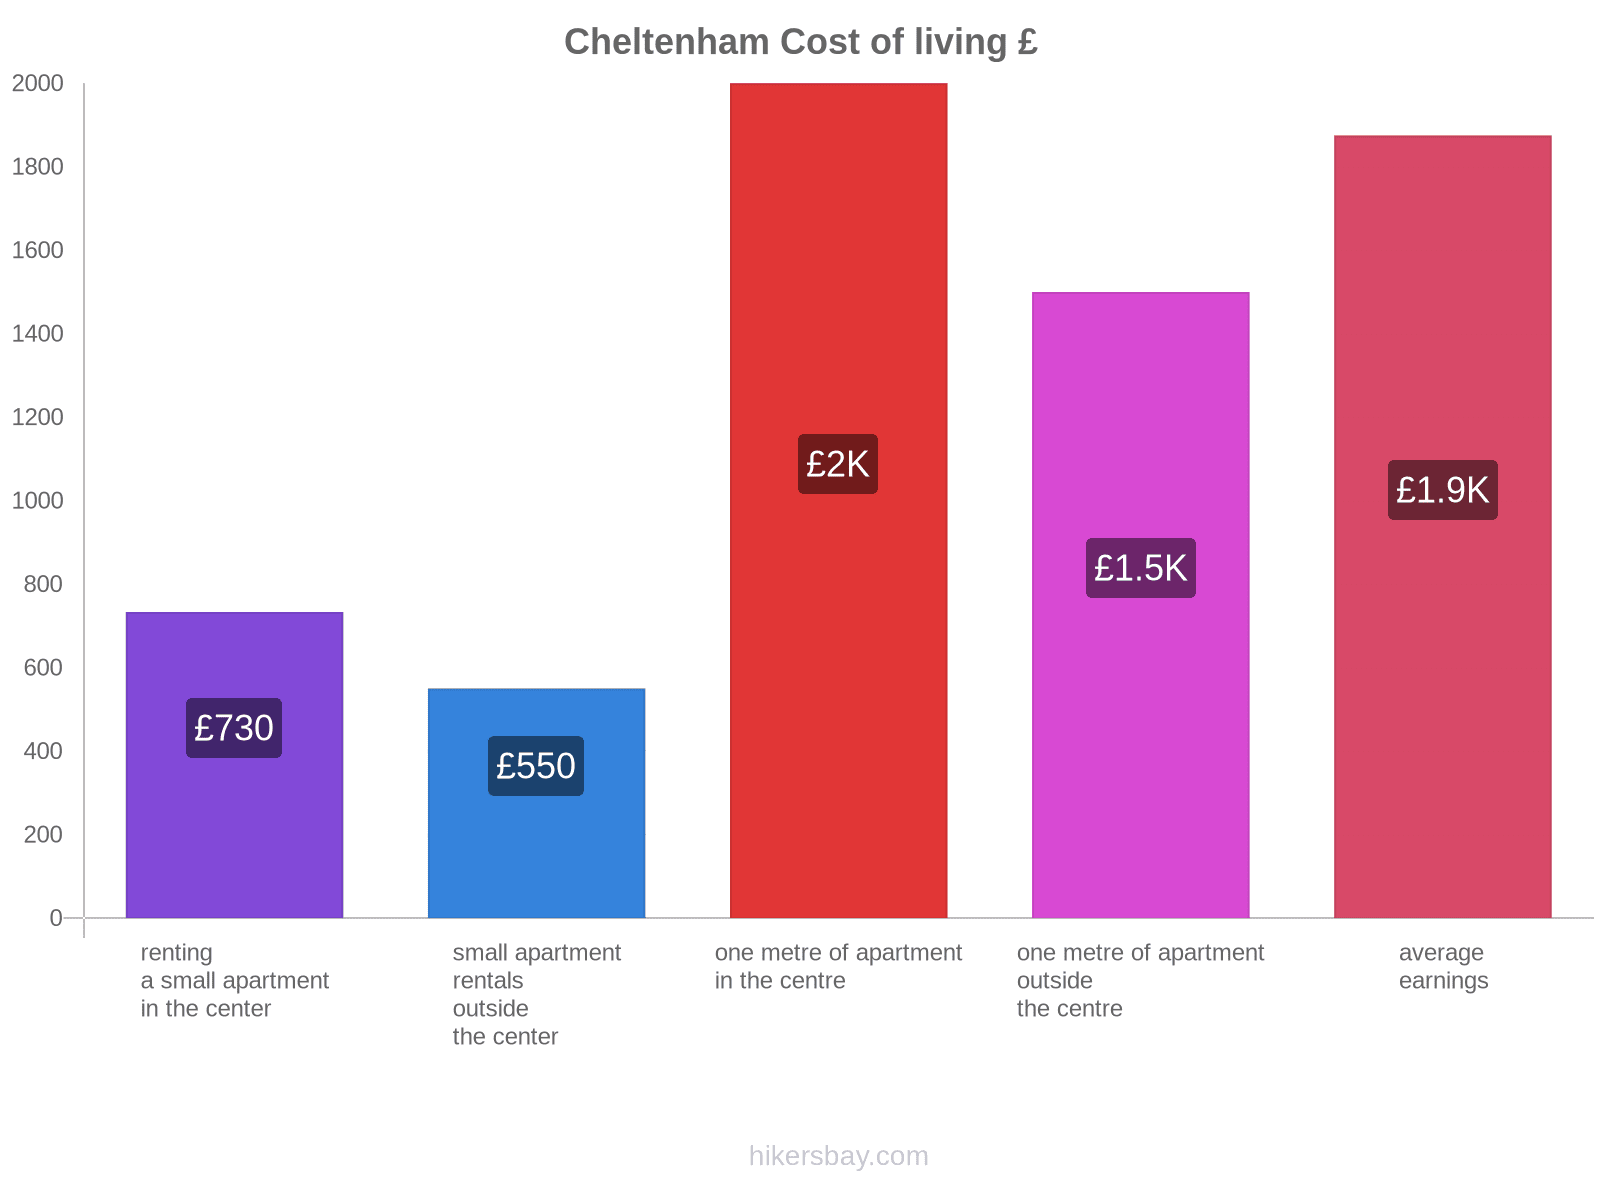 Cheltenham cost of living hikersbay.com